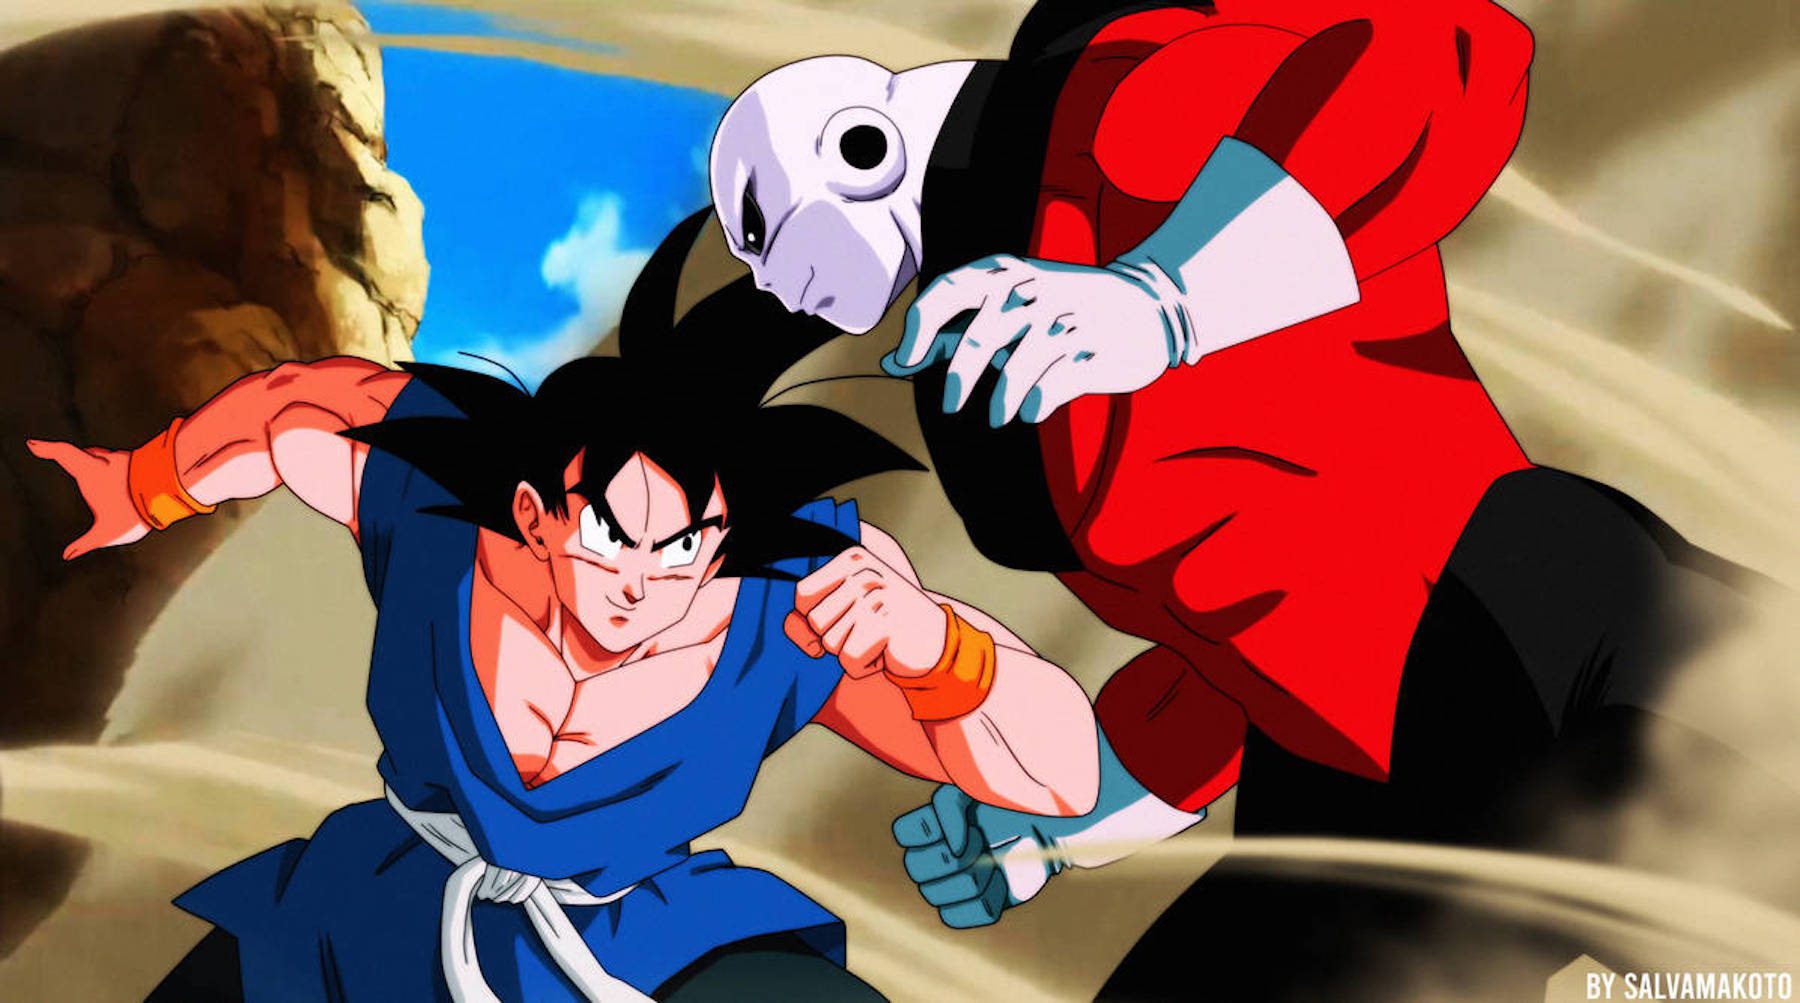 Goku fighting Jiren from Dragon Ball series of the 80s. 